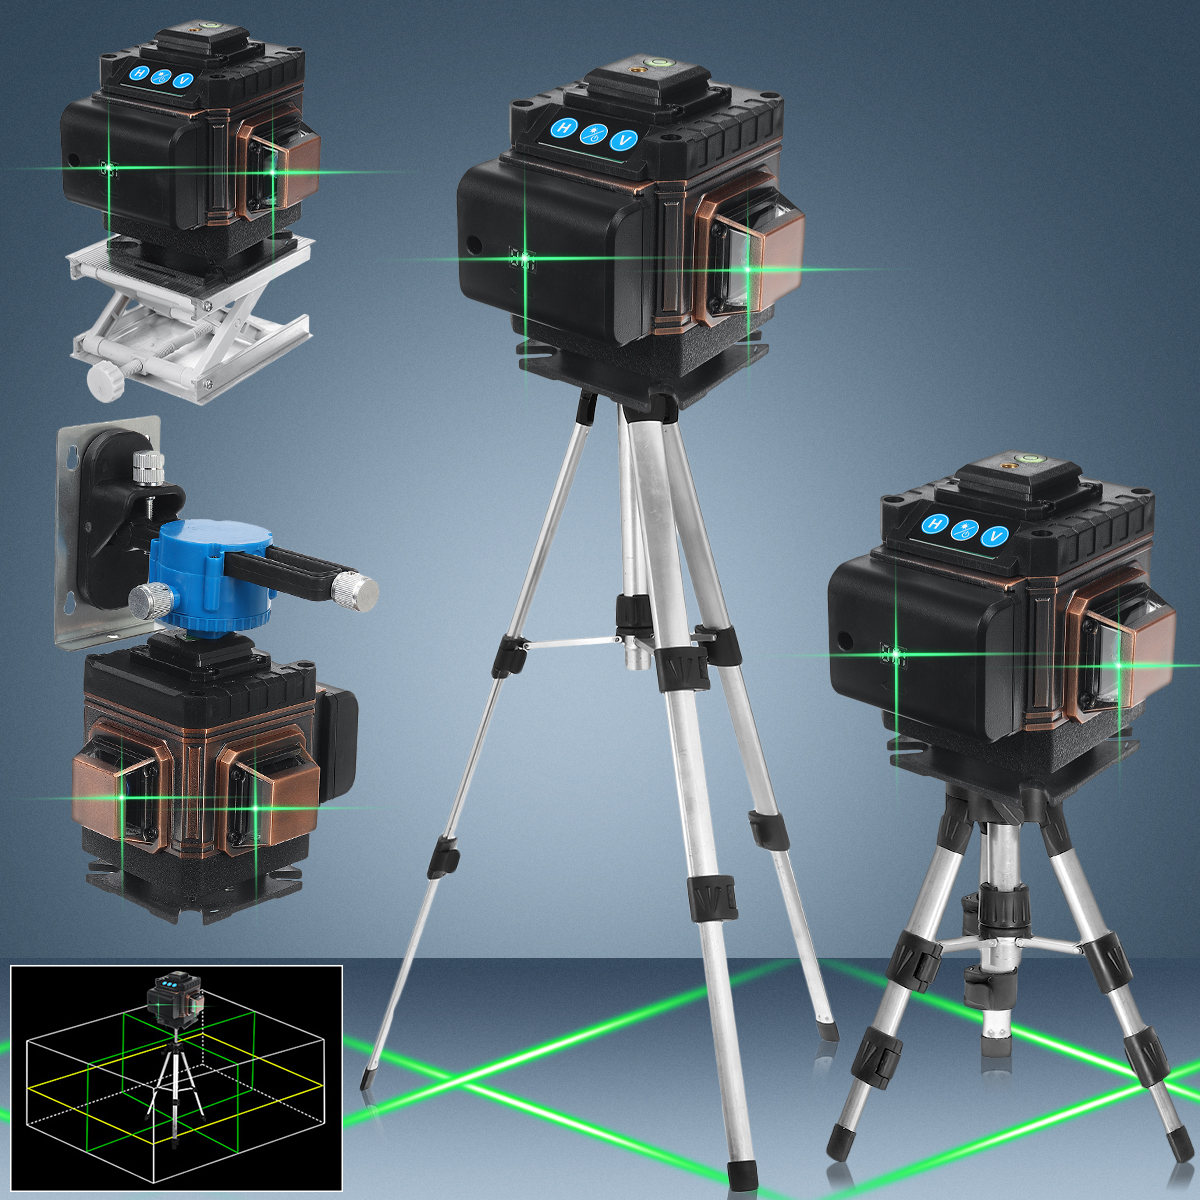 81216Line-Laser-Level-with-Green-Light-Digital-Self-Leveling-360deg-Rotary-Measure-1825069-3